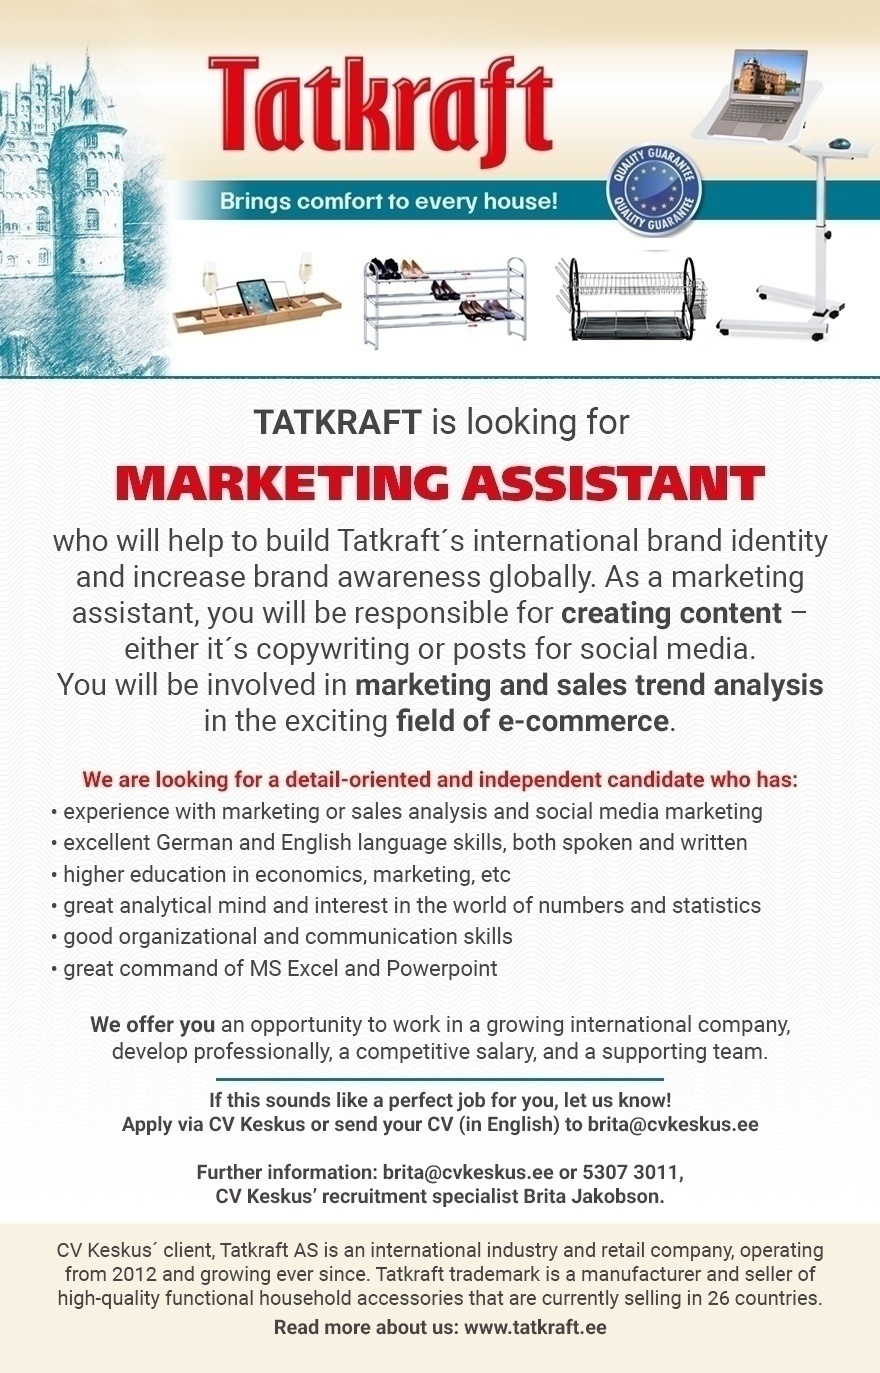 Tatkraft AS German-speaking marketing assistant